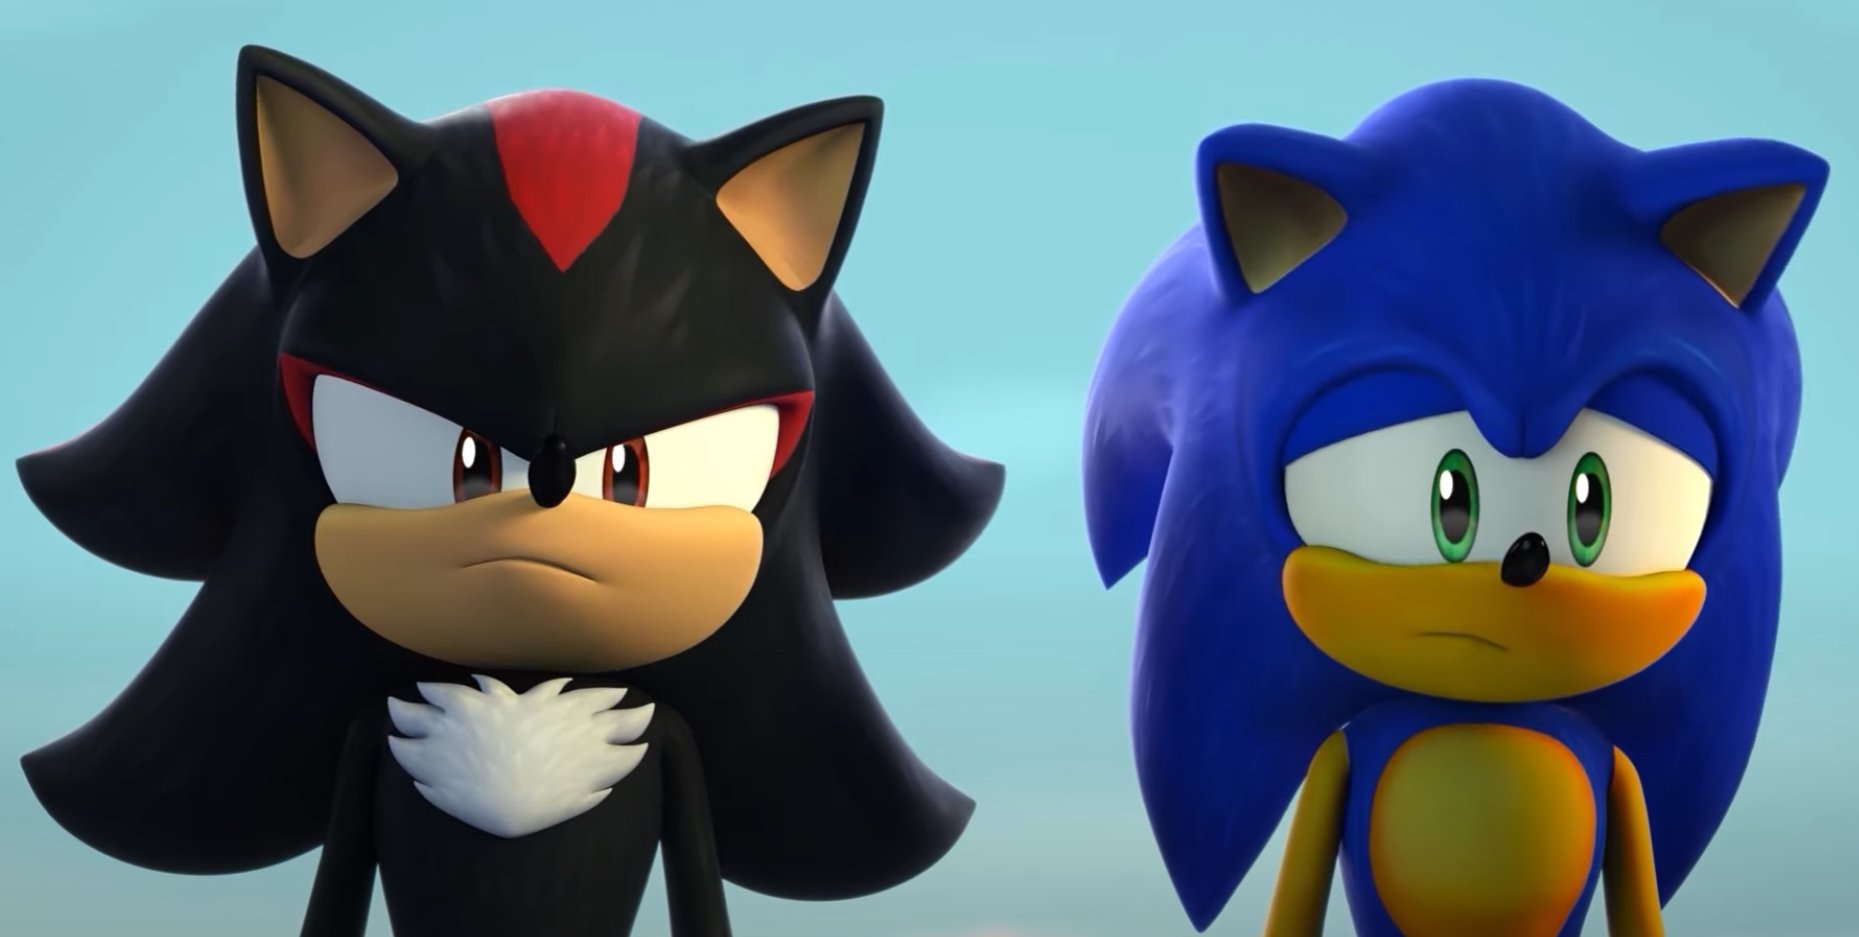 SonicHub on X: Sonic Prime Season 2 Episode 1 Was a banger